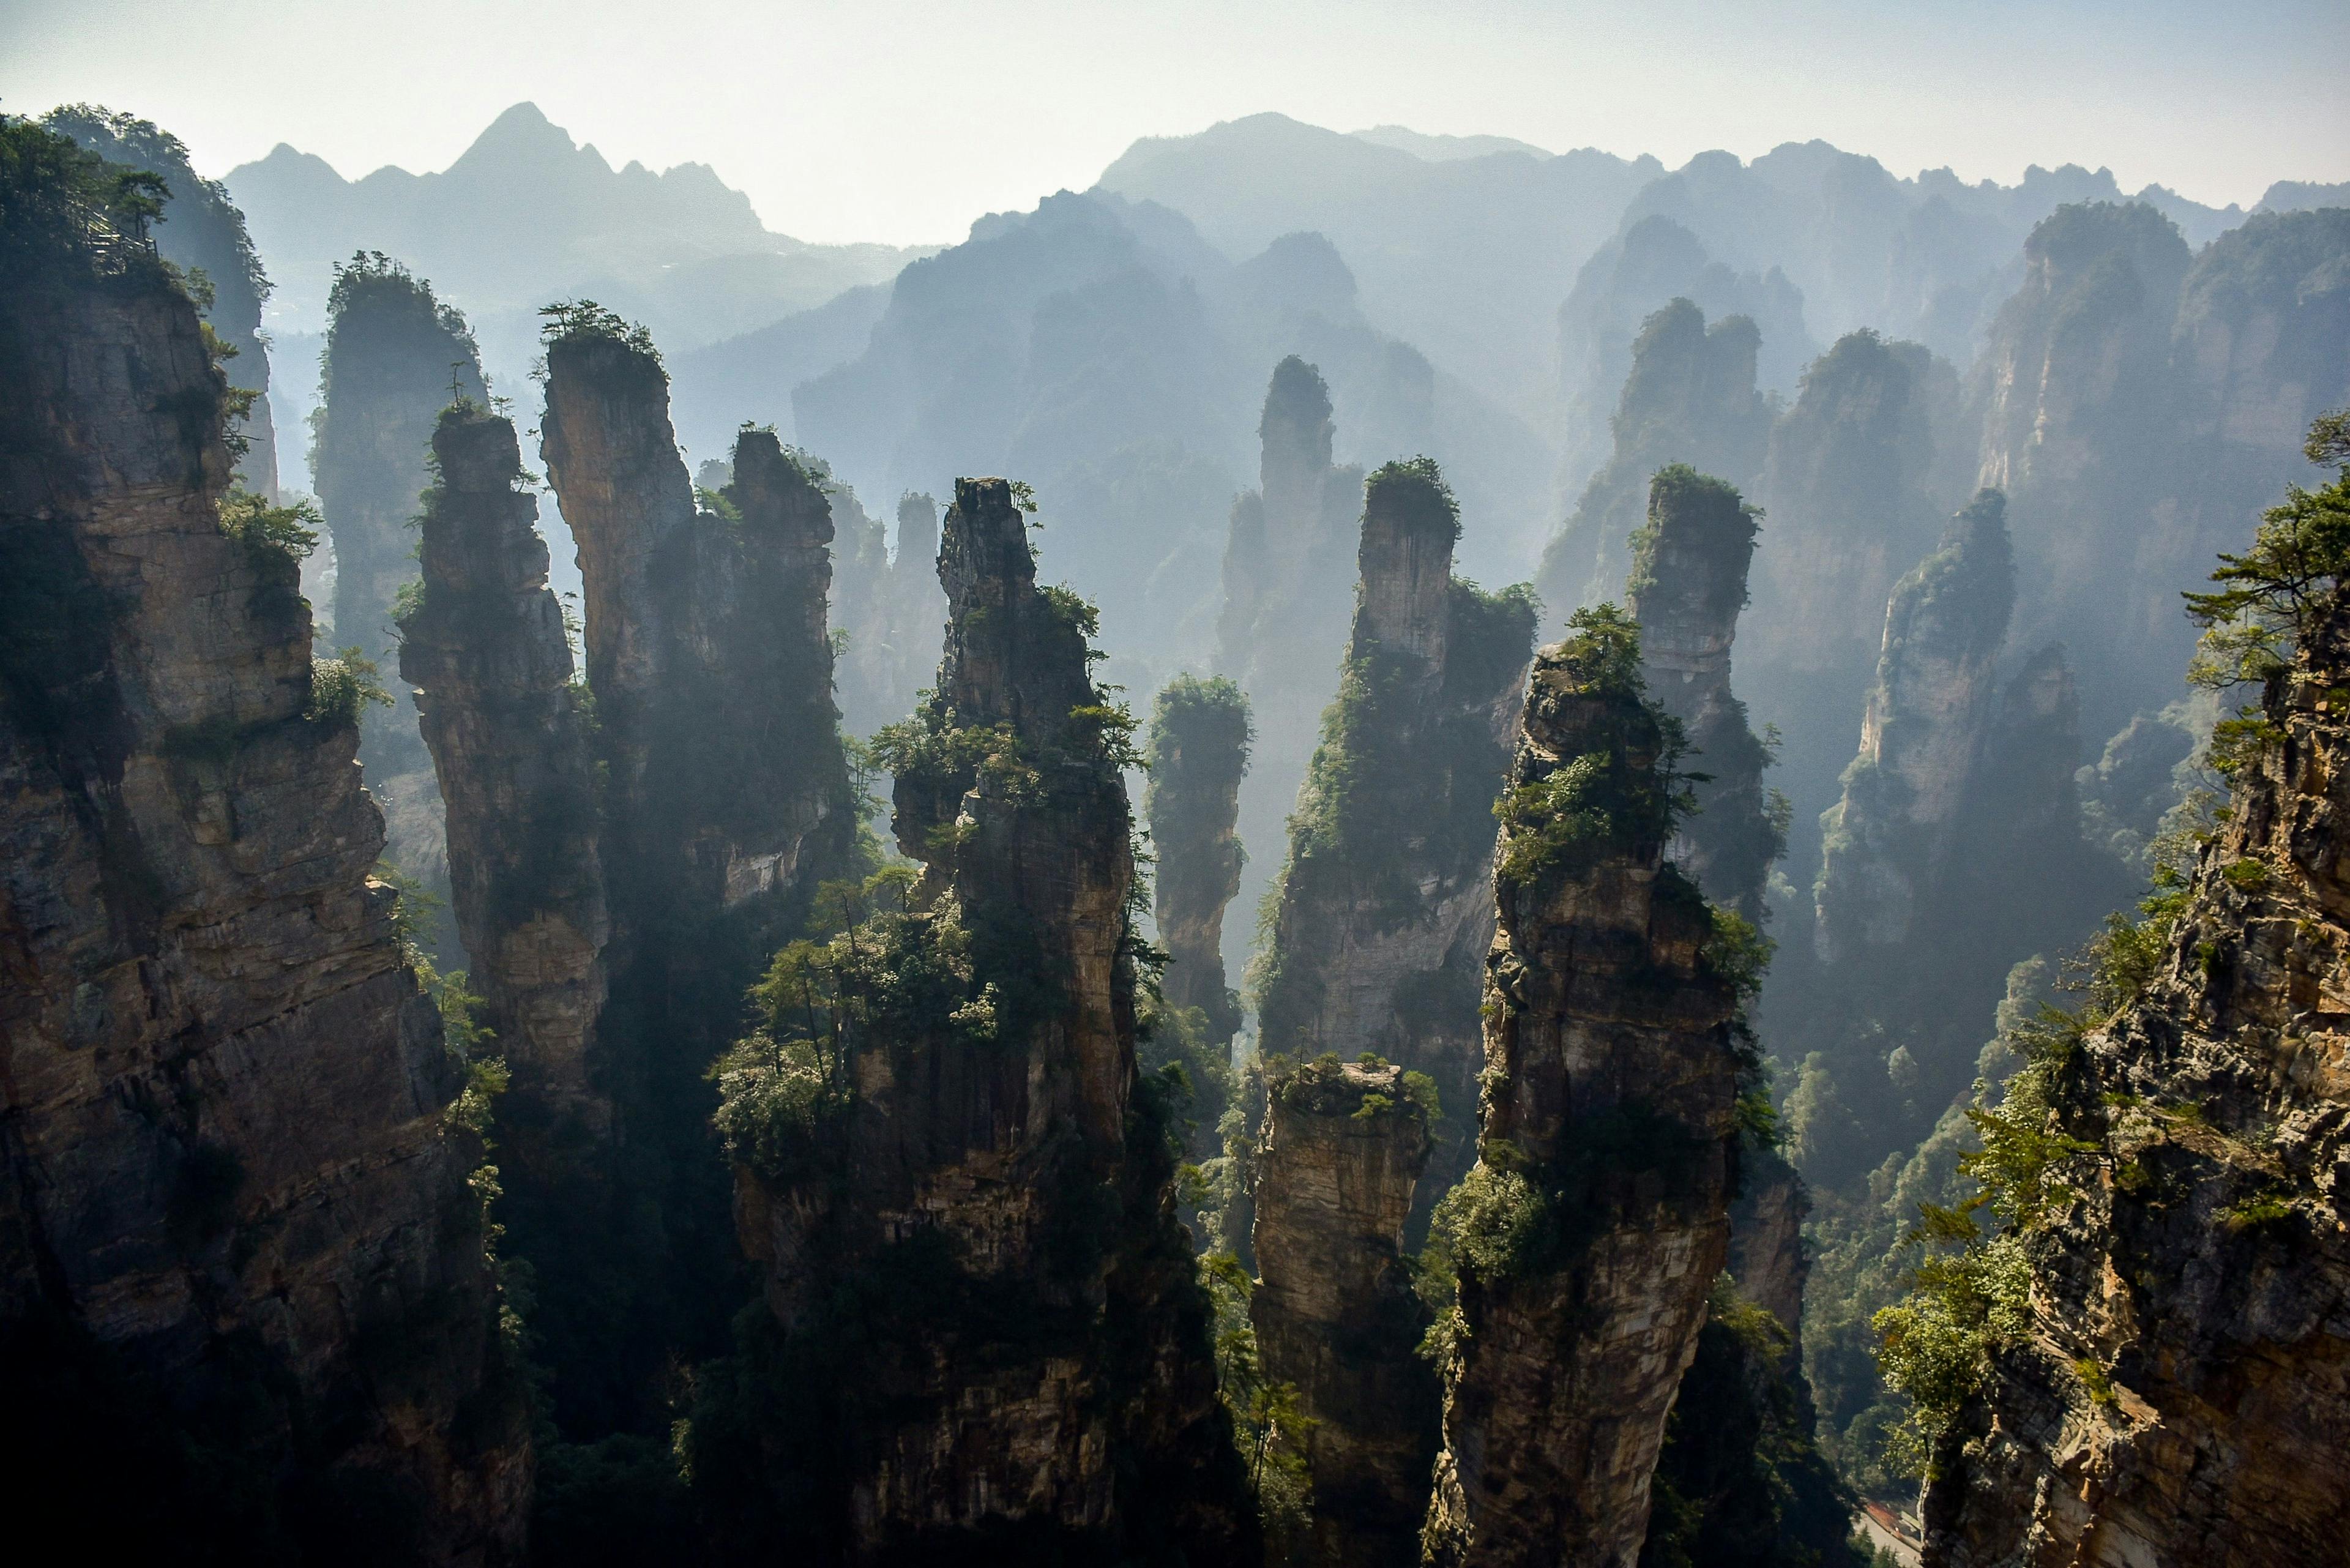 View on towering rocks in Zhangjiajie National park in China.